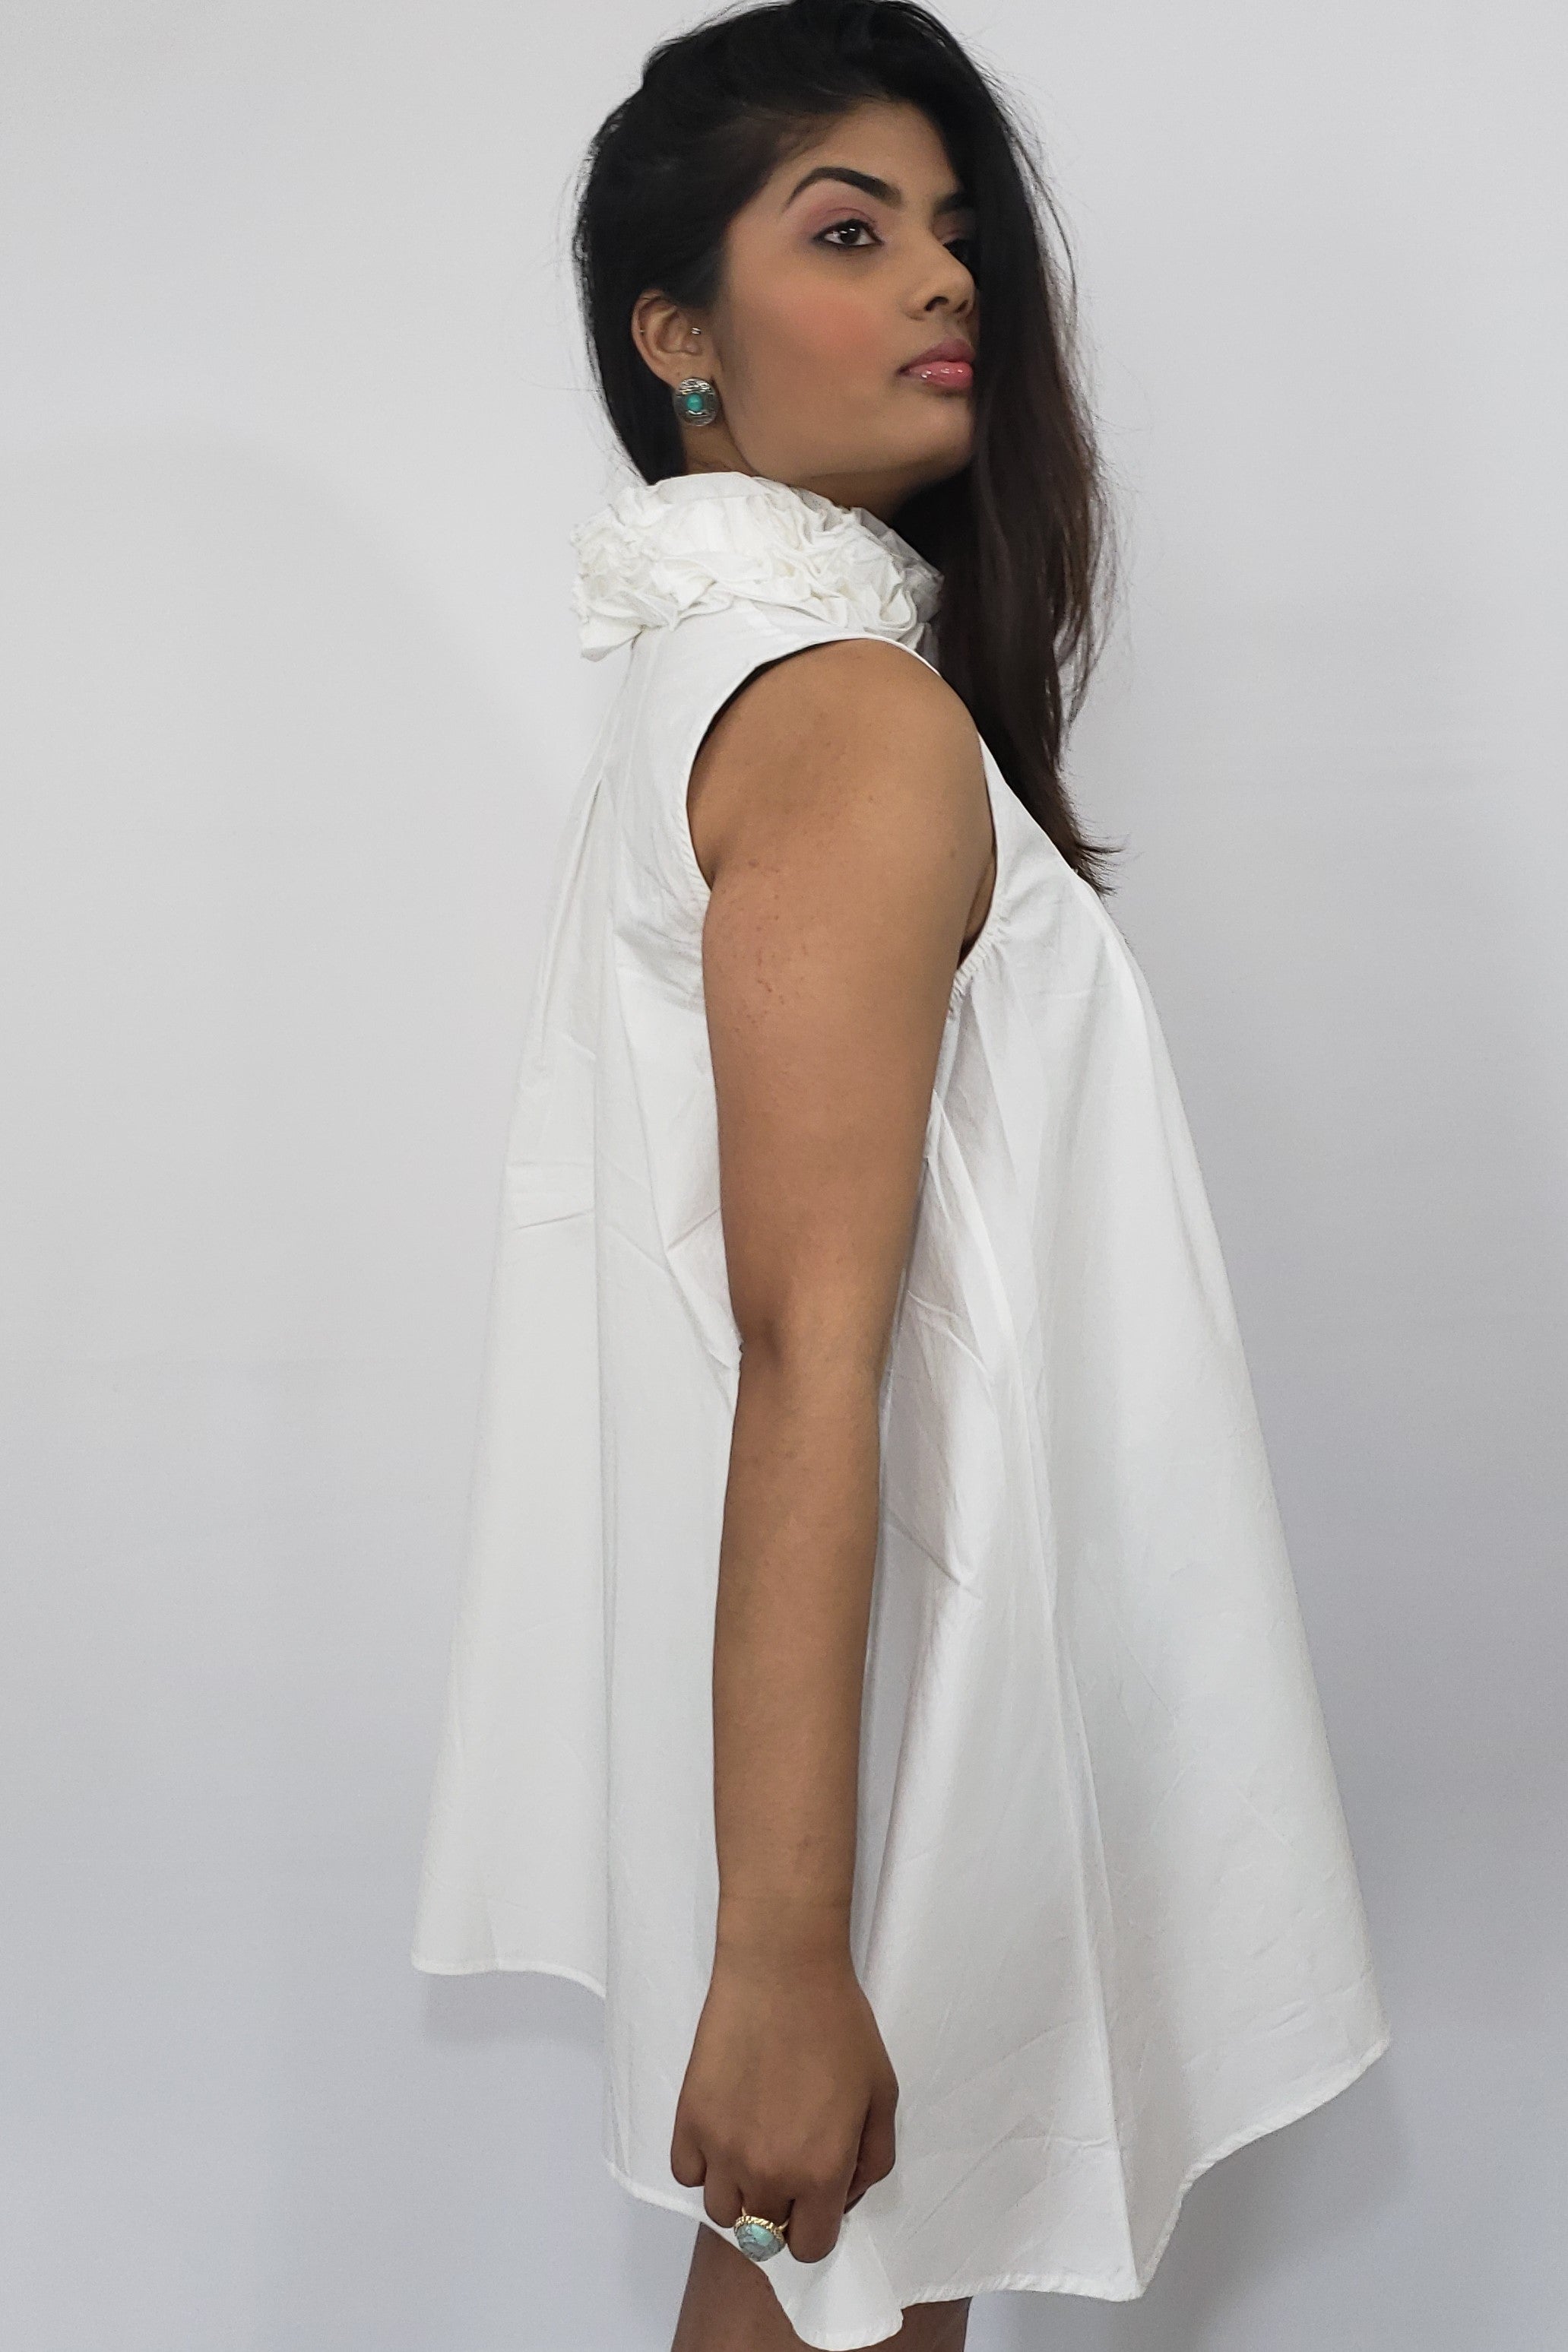 It’s A White Affair Sleeveless Mini Dress with Ruffled Collar - Houzz of DVA Boutique